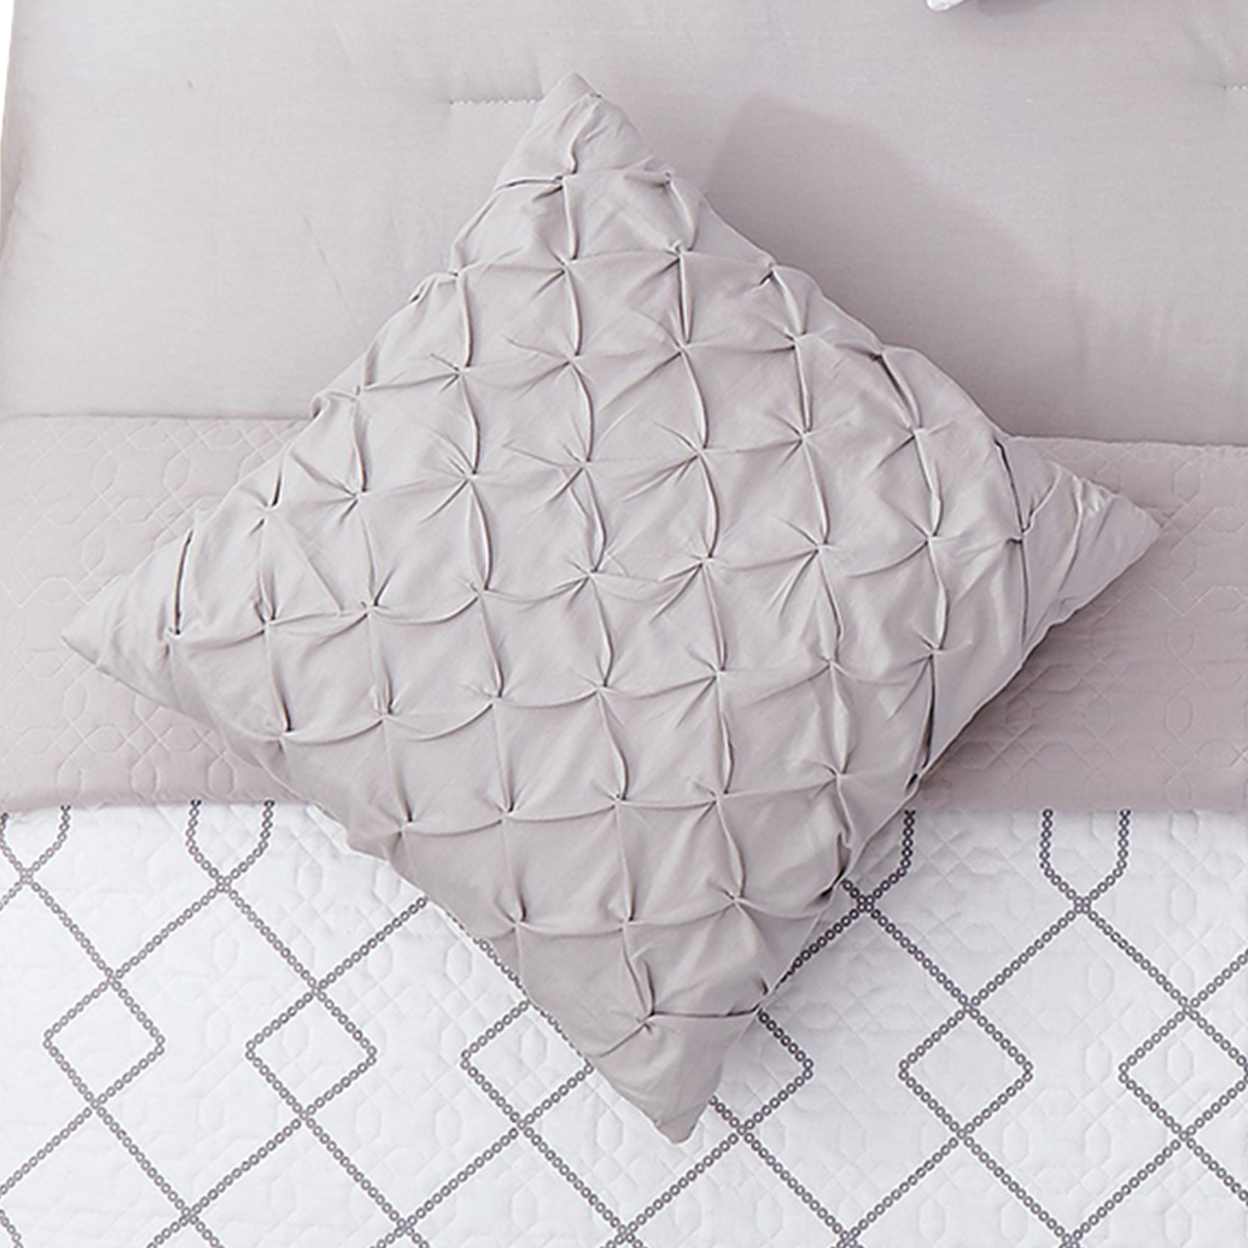 8 Piece King Size Fabric Comforter Set With Geometric Prints,White And Gray- Saltoro Sherpi